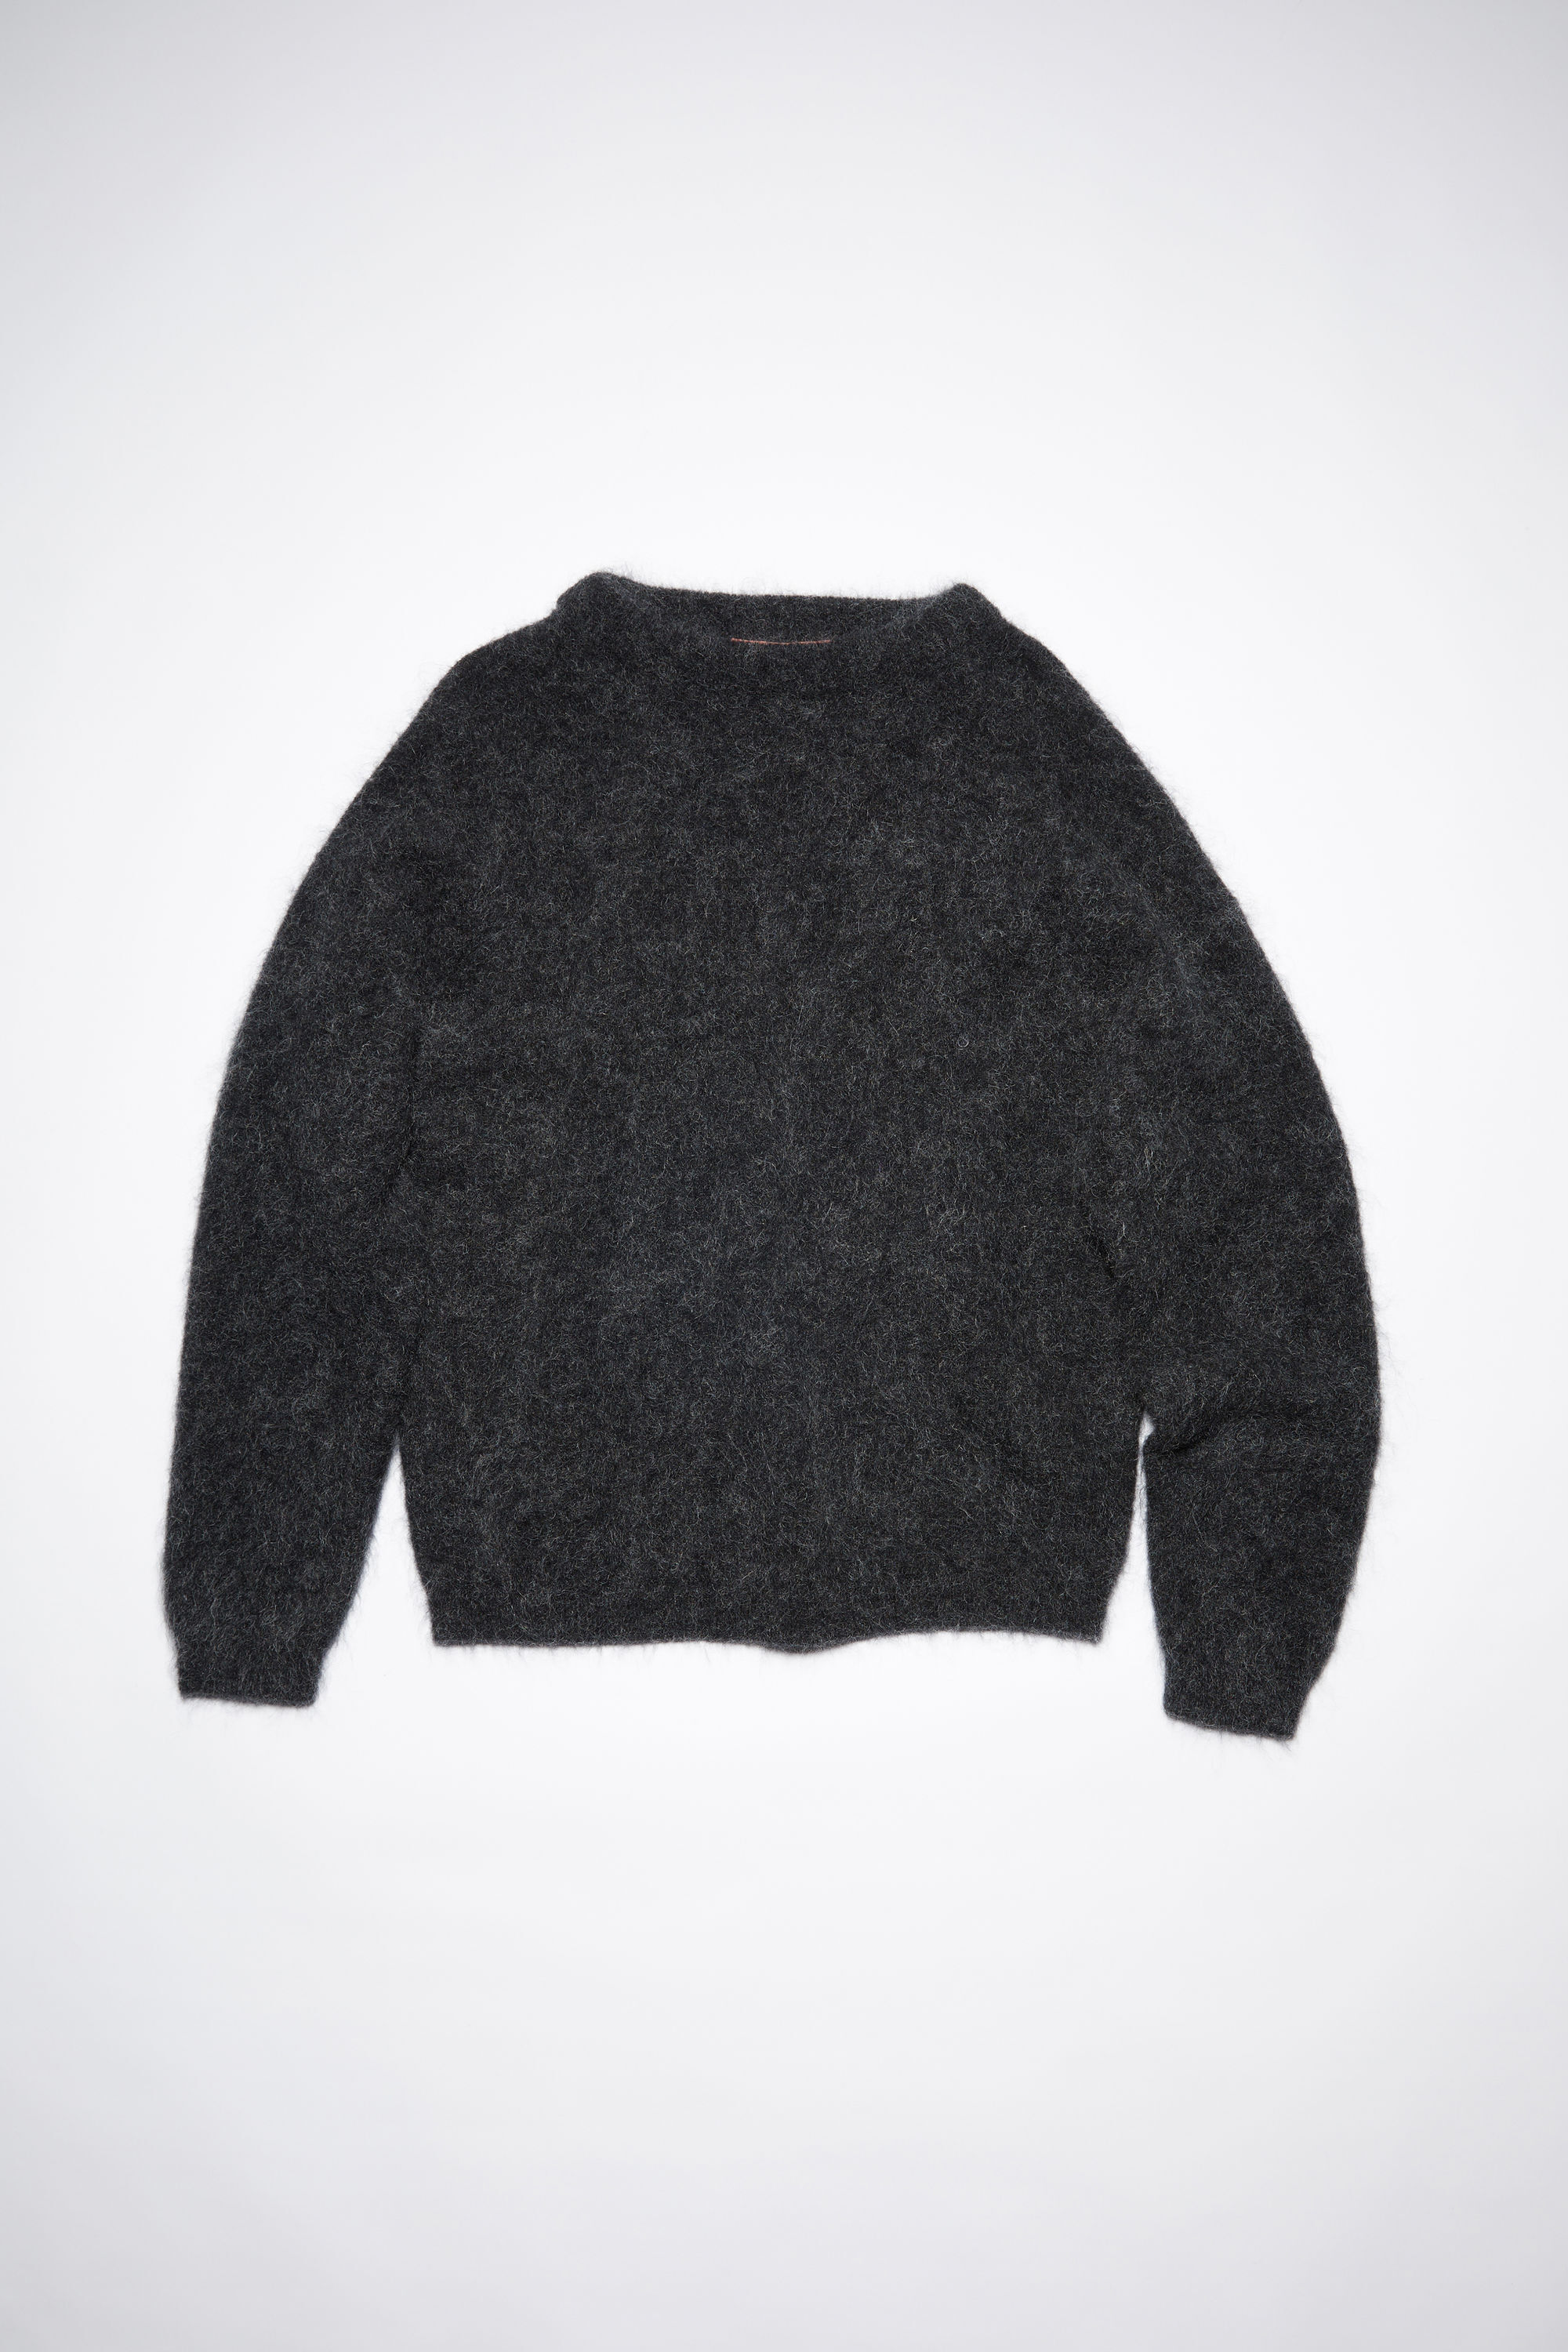 Acne Studios - Mohair wool crew neck jumper - Anthracite grey